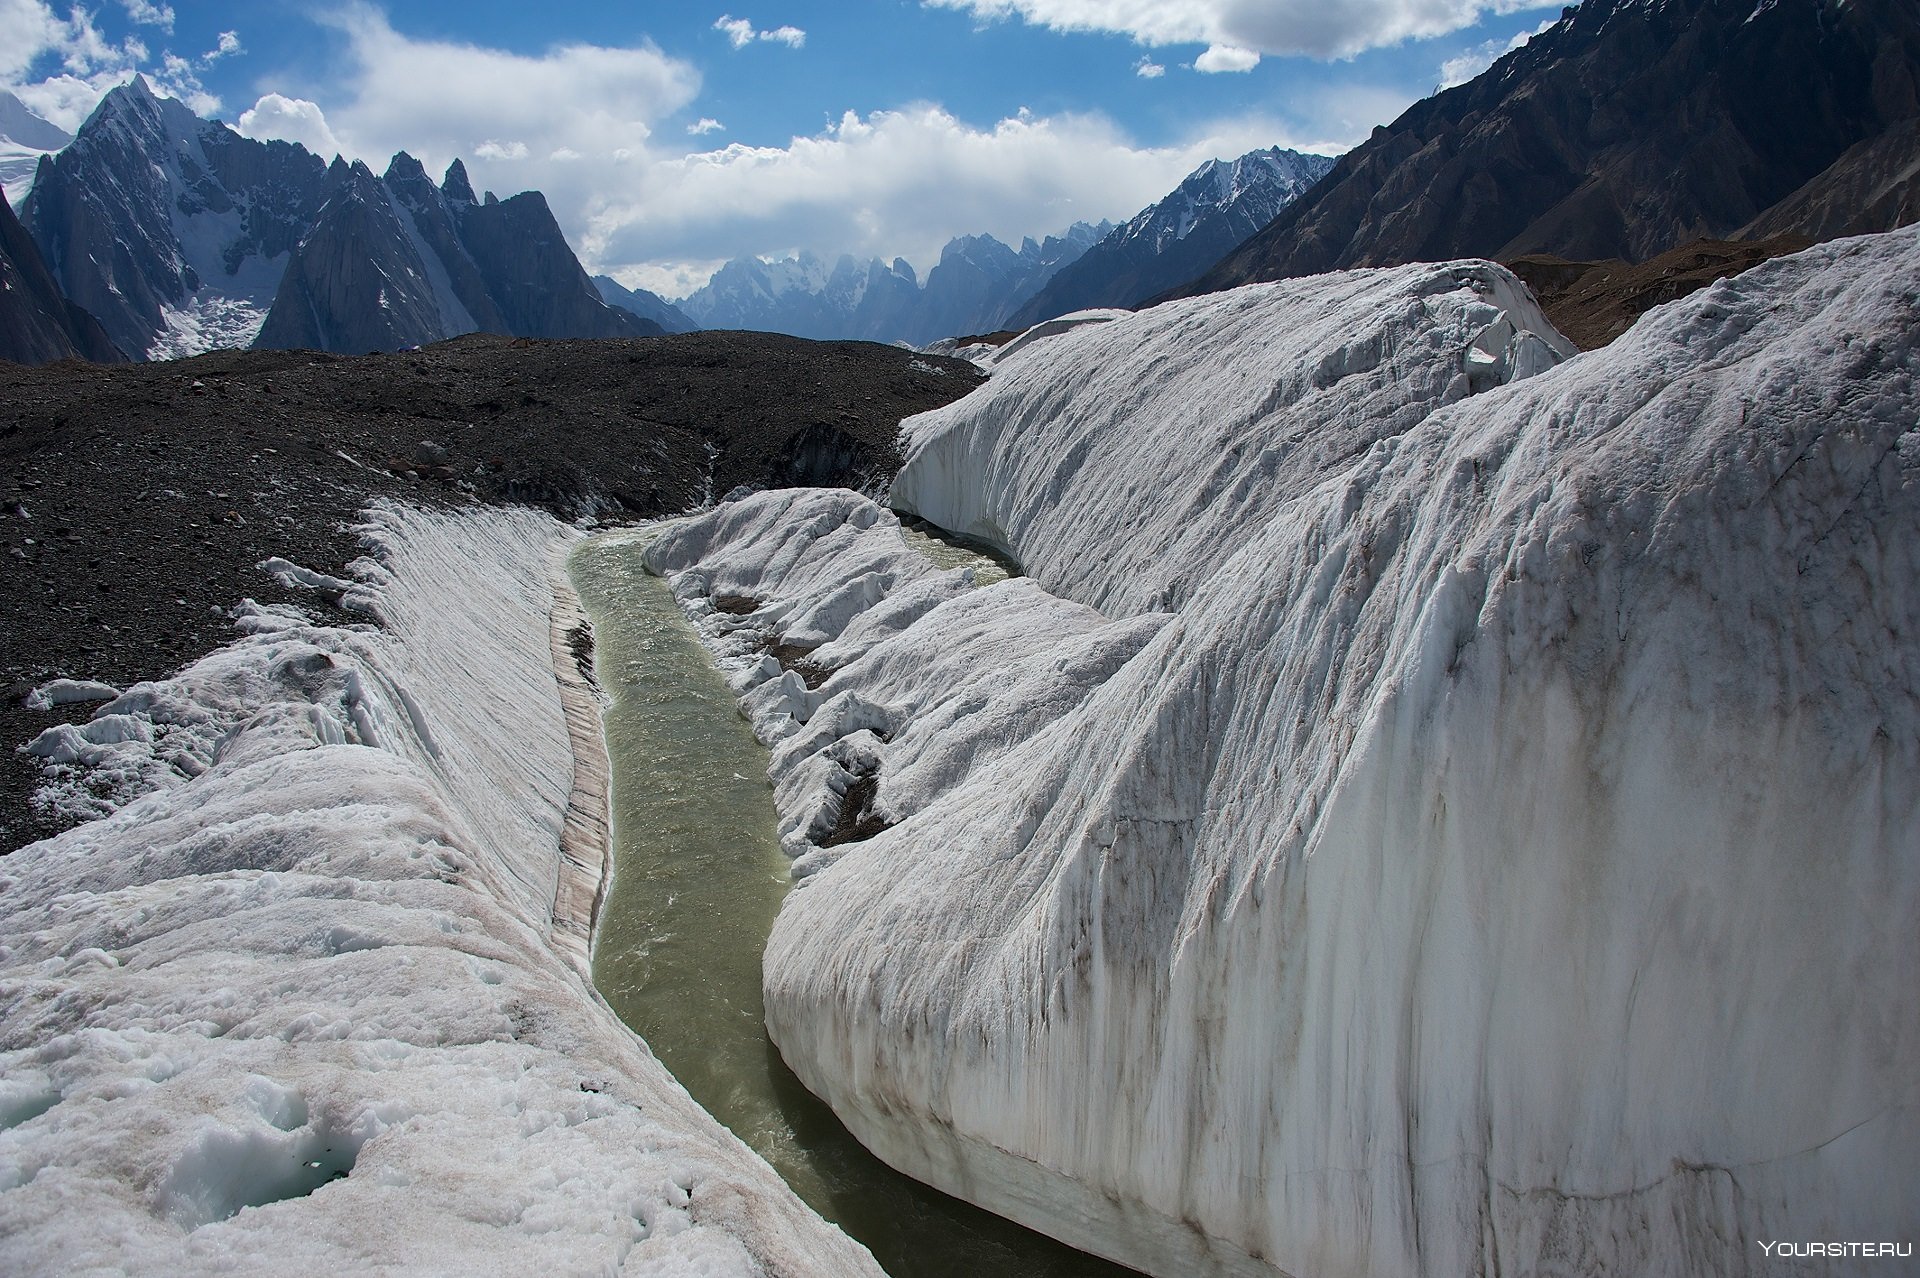 Самую большую площадь занимают ледники. Ледник Балторо Пакистан. Ледник Шаурту Кабардино-Балкария. Ледник Балторо и к2 Пакистан. Ледник Караугом.